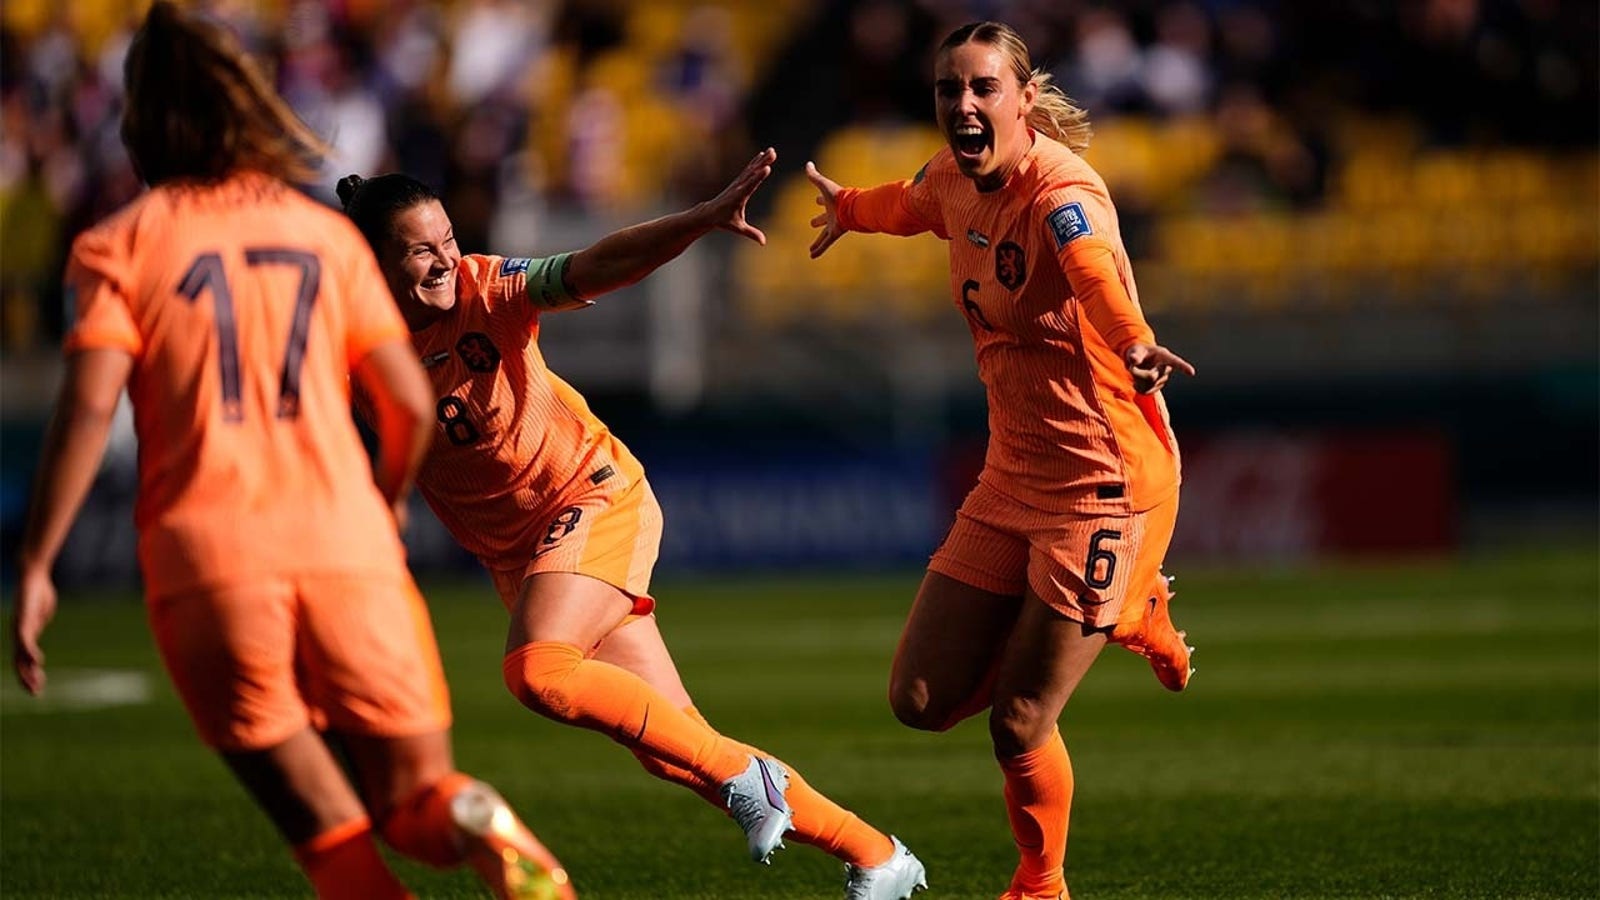 Netherlands' Jill Roord scores goal vs. USA in 17'